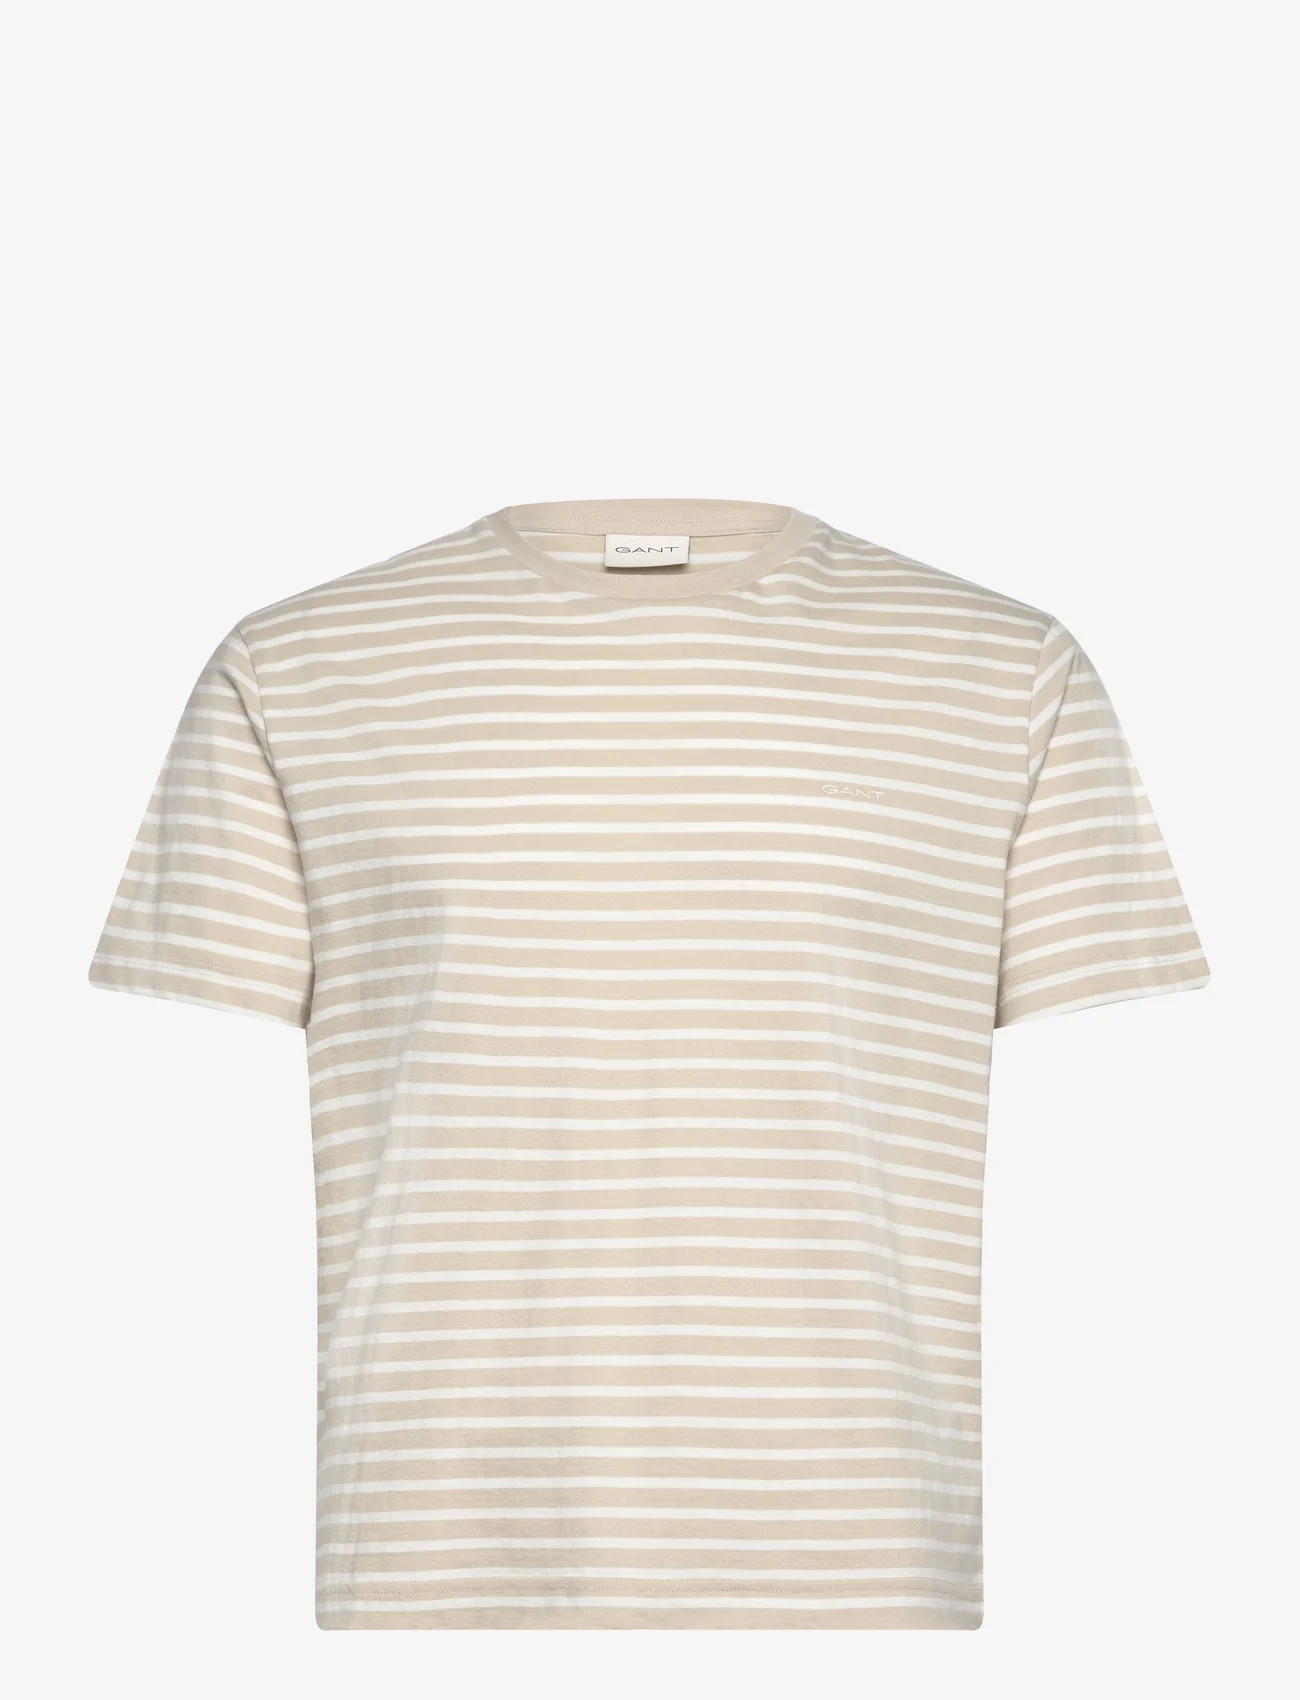 GANT - STRIPED T-SHIRT - kortärmade t-shirts - silky beige - 0